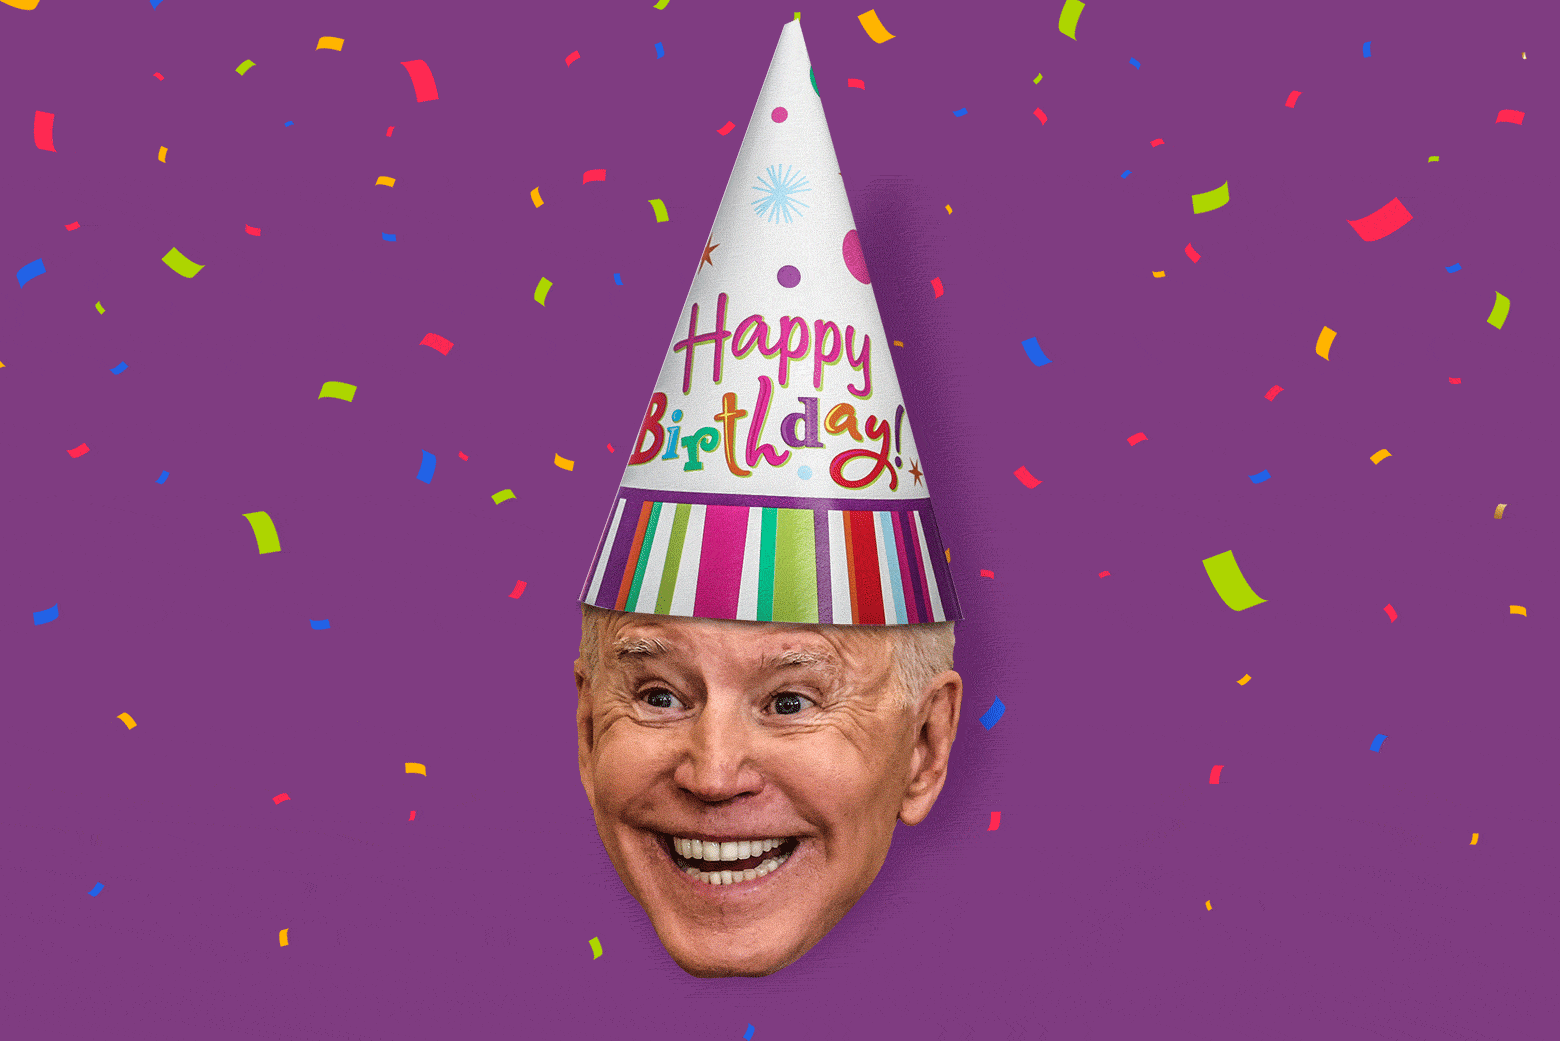 Happy birthday, Joe Biden.